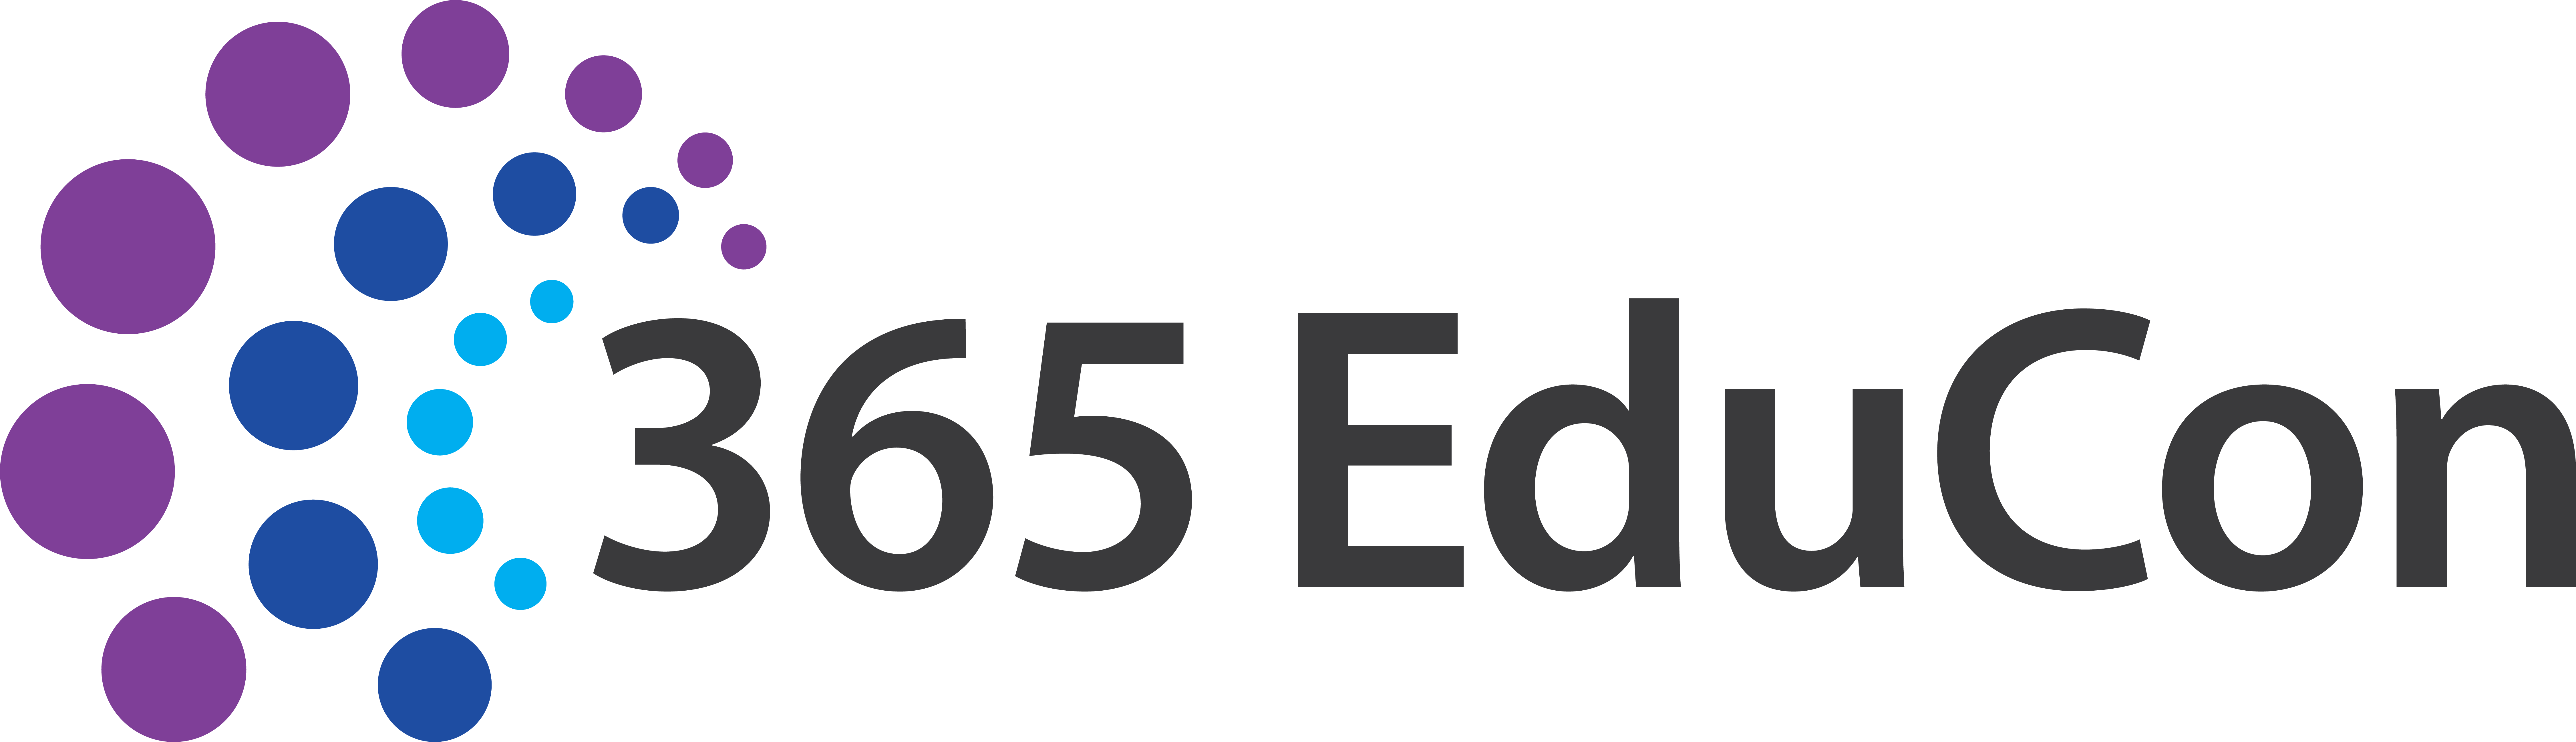 Microsoft 365 EduCon Conference - Seattle 